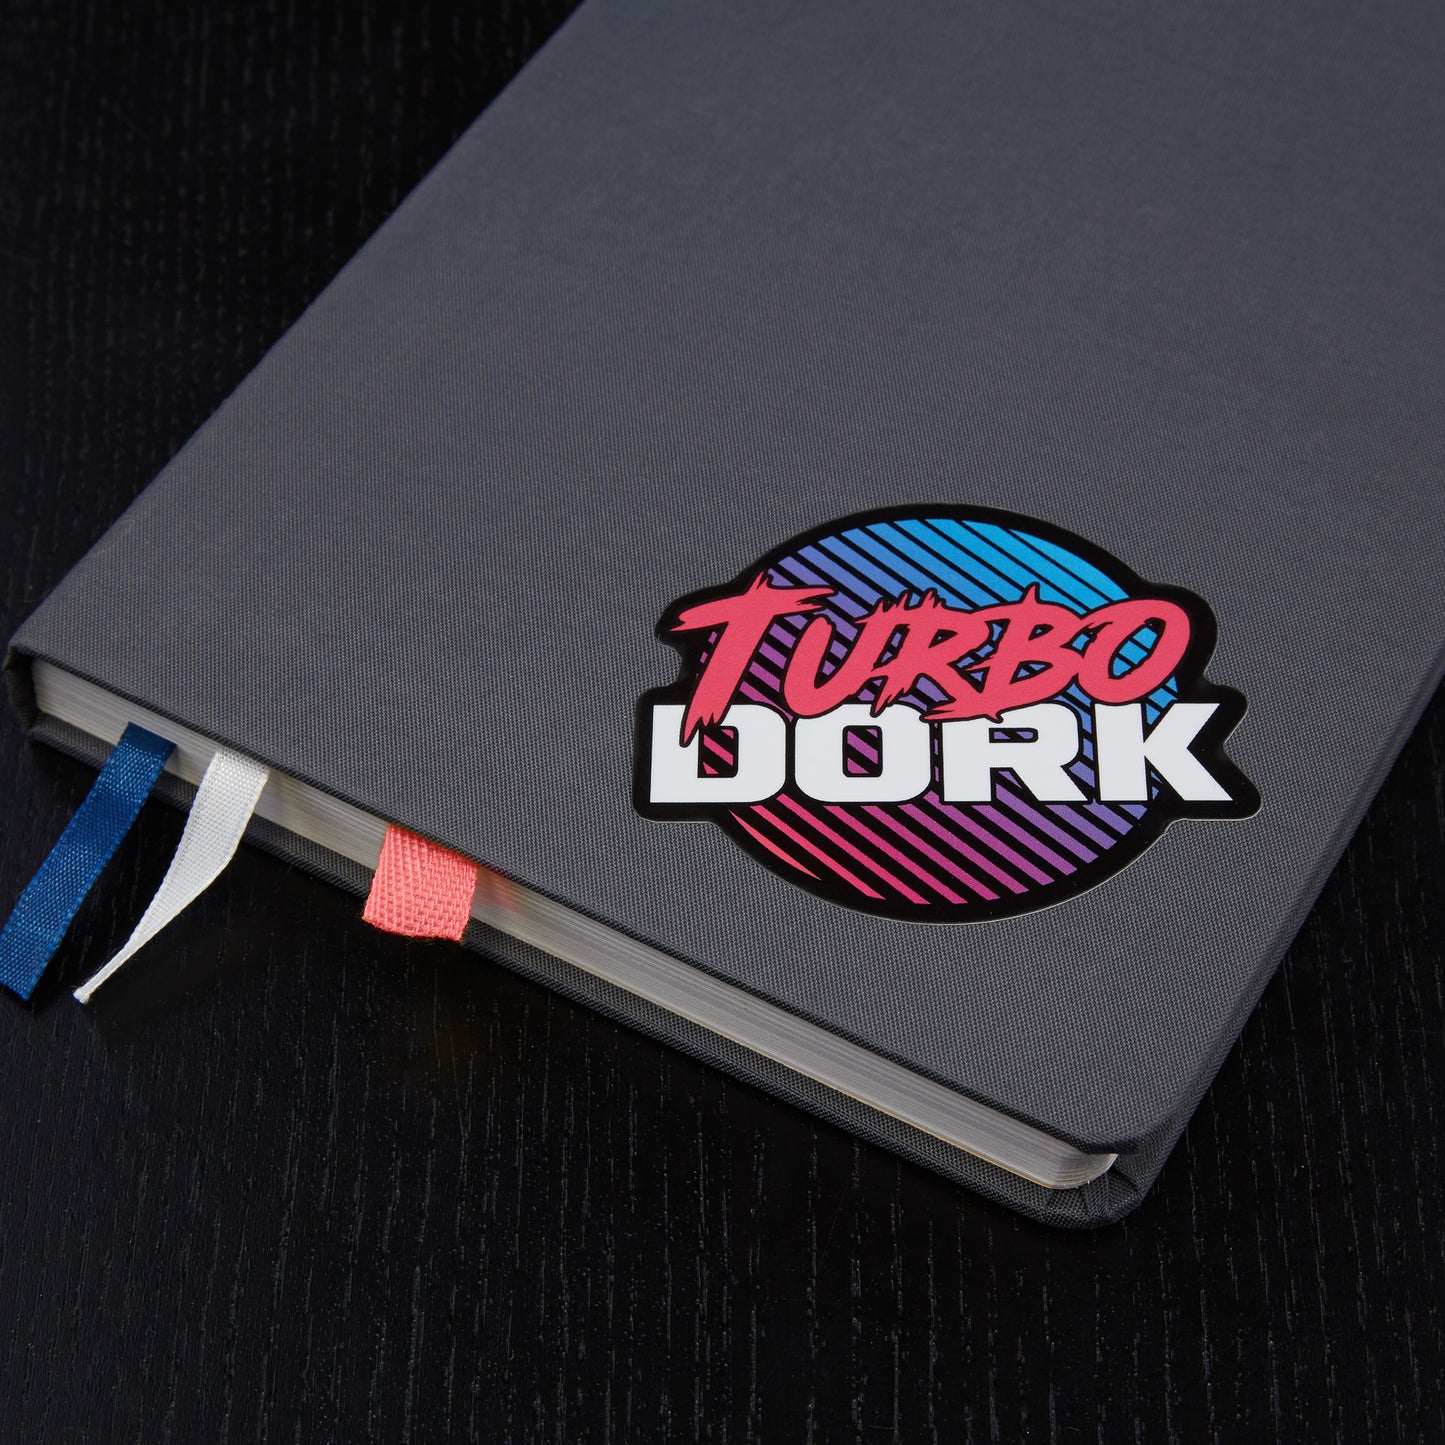 Turbo Dork logo sticker on book